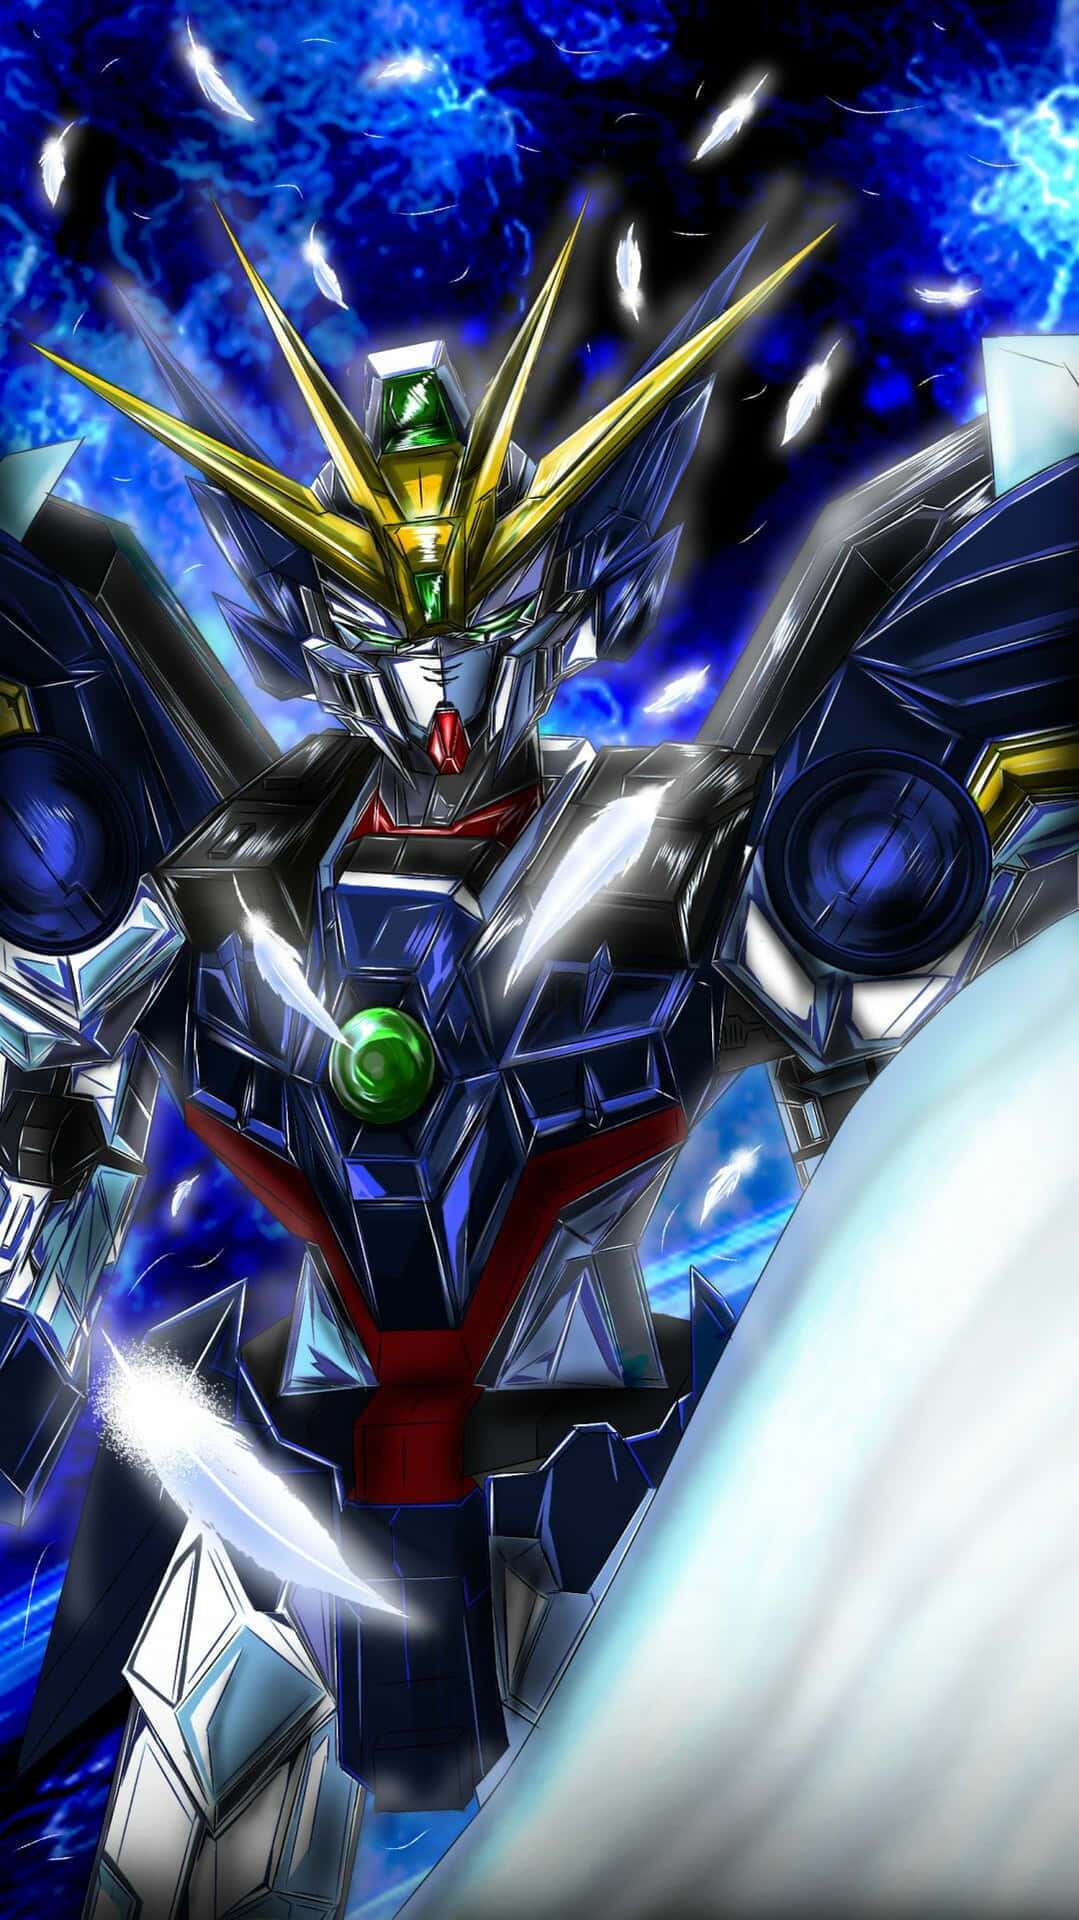 "The Legendary Gundam Wing Piloted by Heero Yuy" Wallpaper